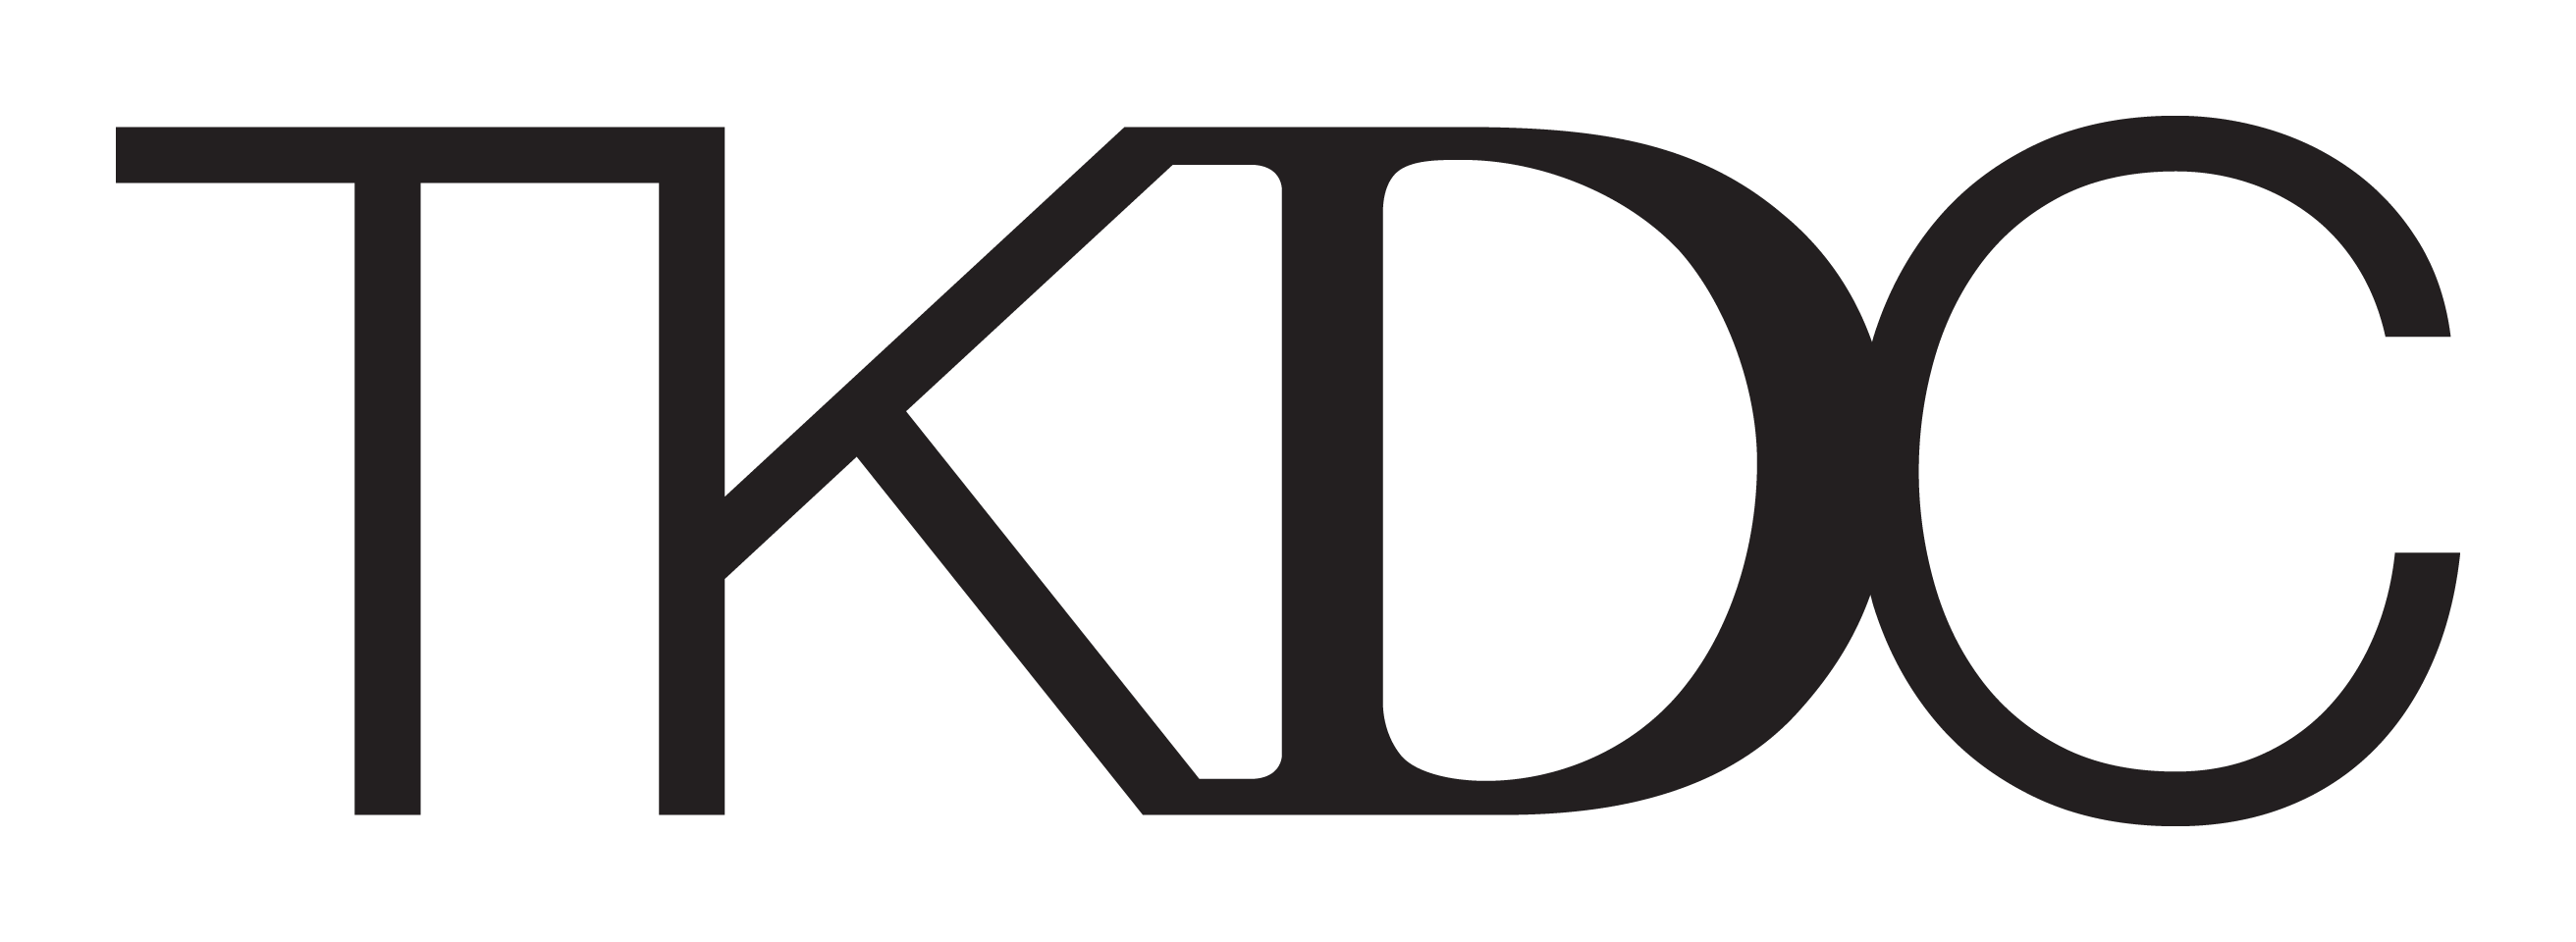 TKDC logo